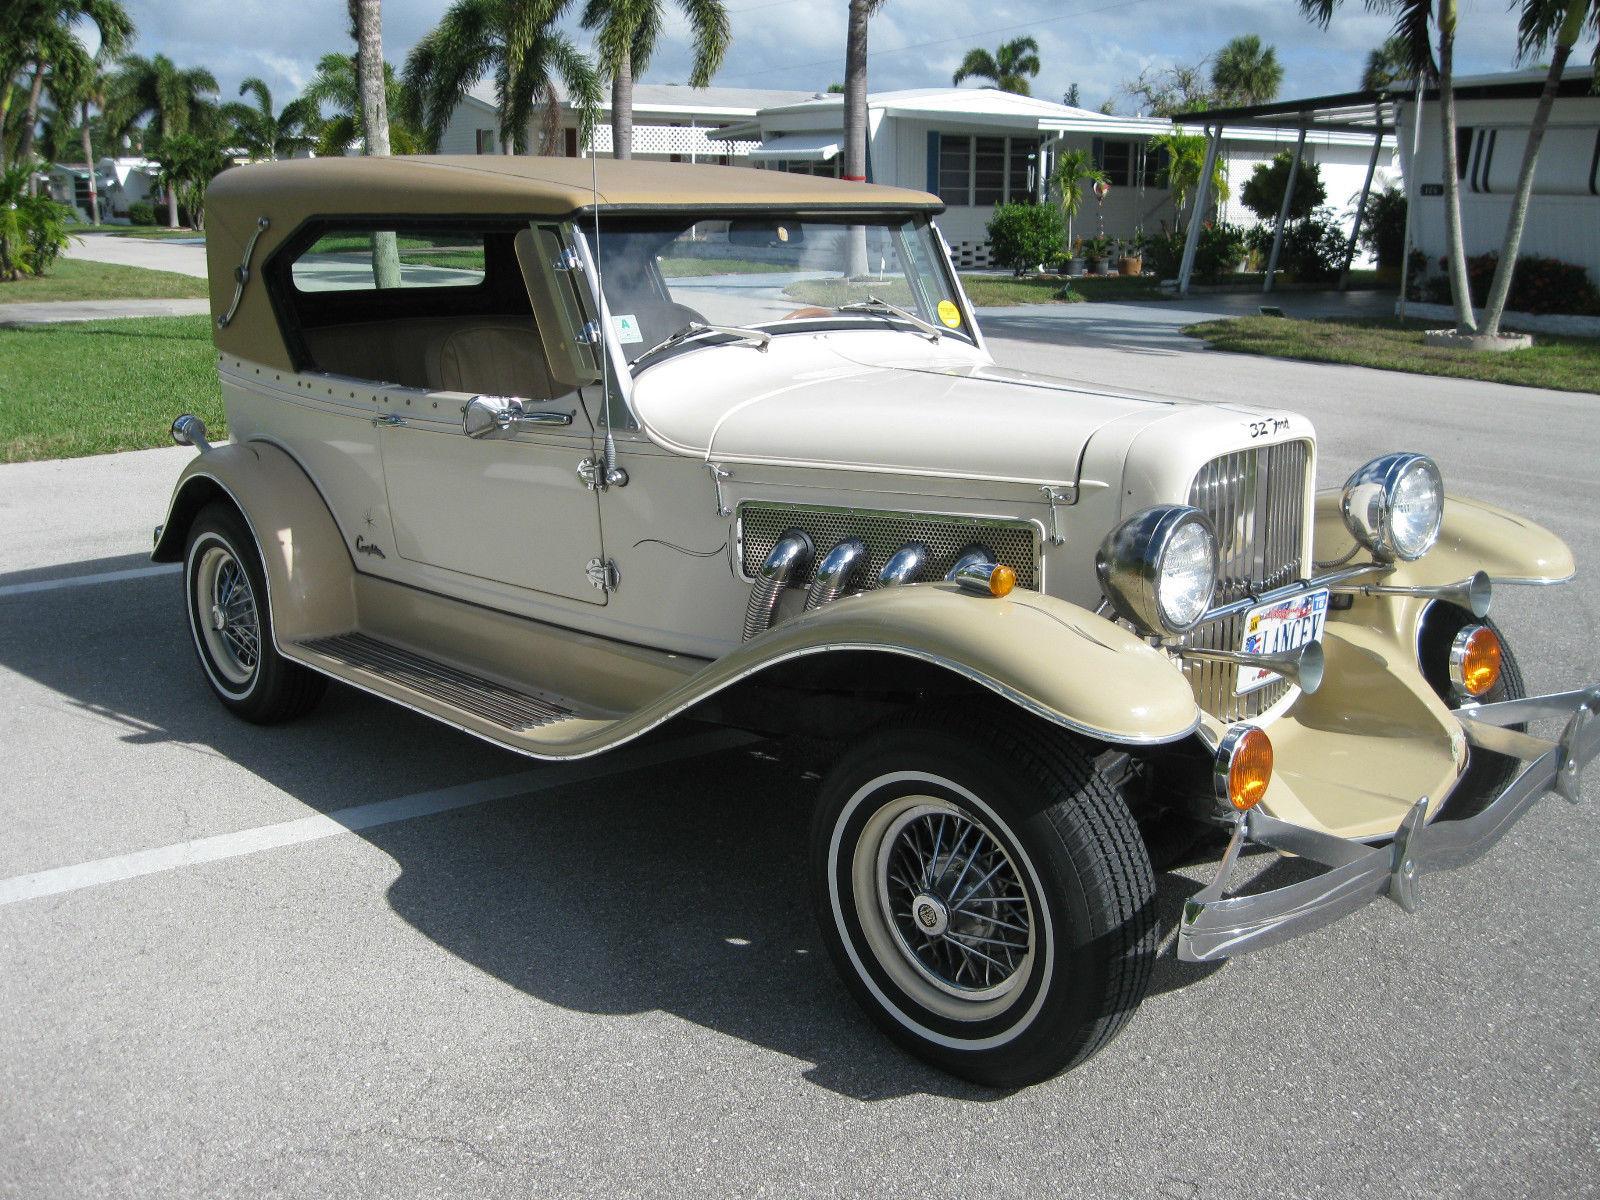 Model cars replicas ford #1